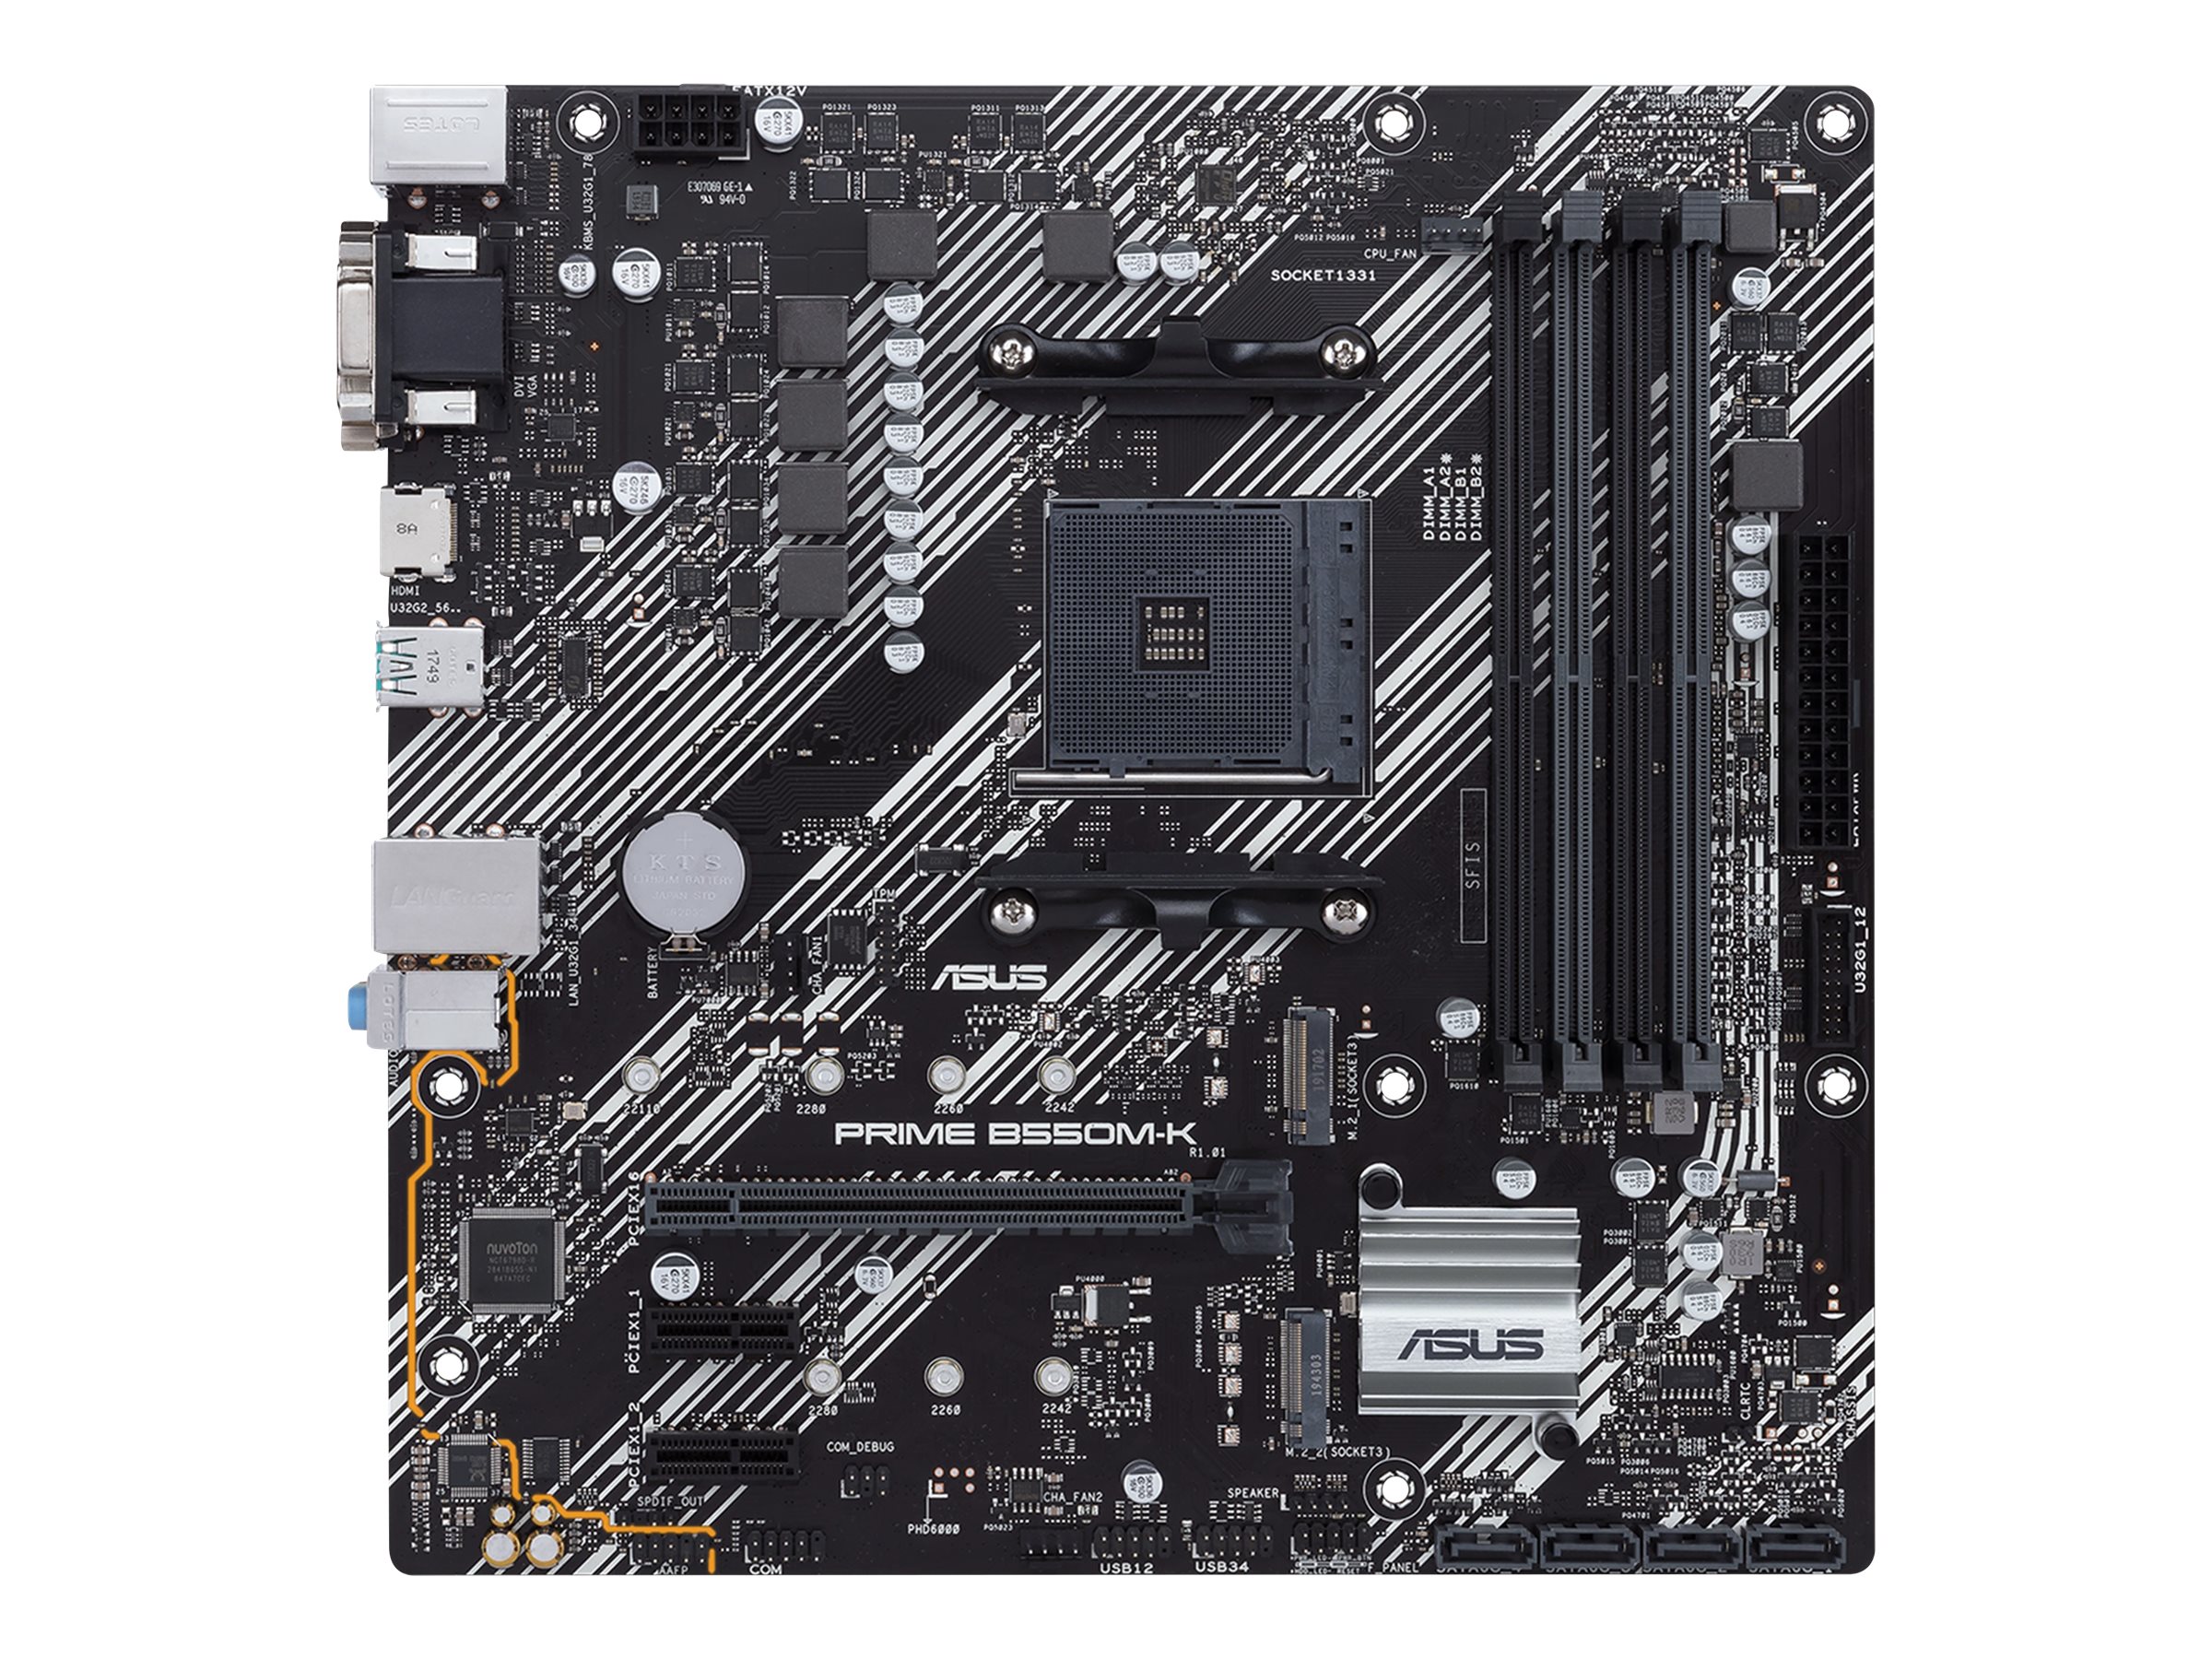 ASUS PRIME B550M-K - Motherboard - micro ATX - Socket AM4 - AMD B550 Chipsatz - USB 3.2 Gen 1, USB 3.2 Gen 2 - Gigabit LAN - Onboard-Grafik (CPU erforderlich)